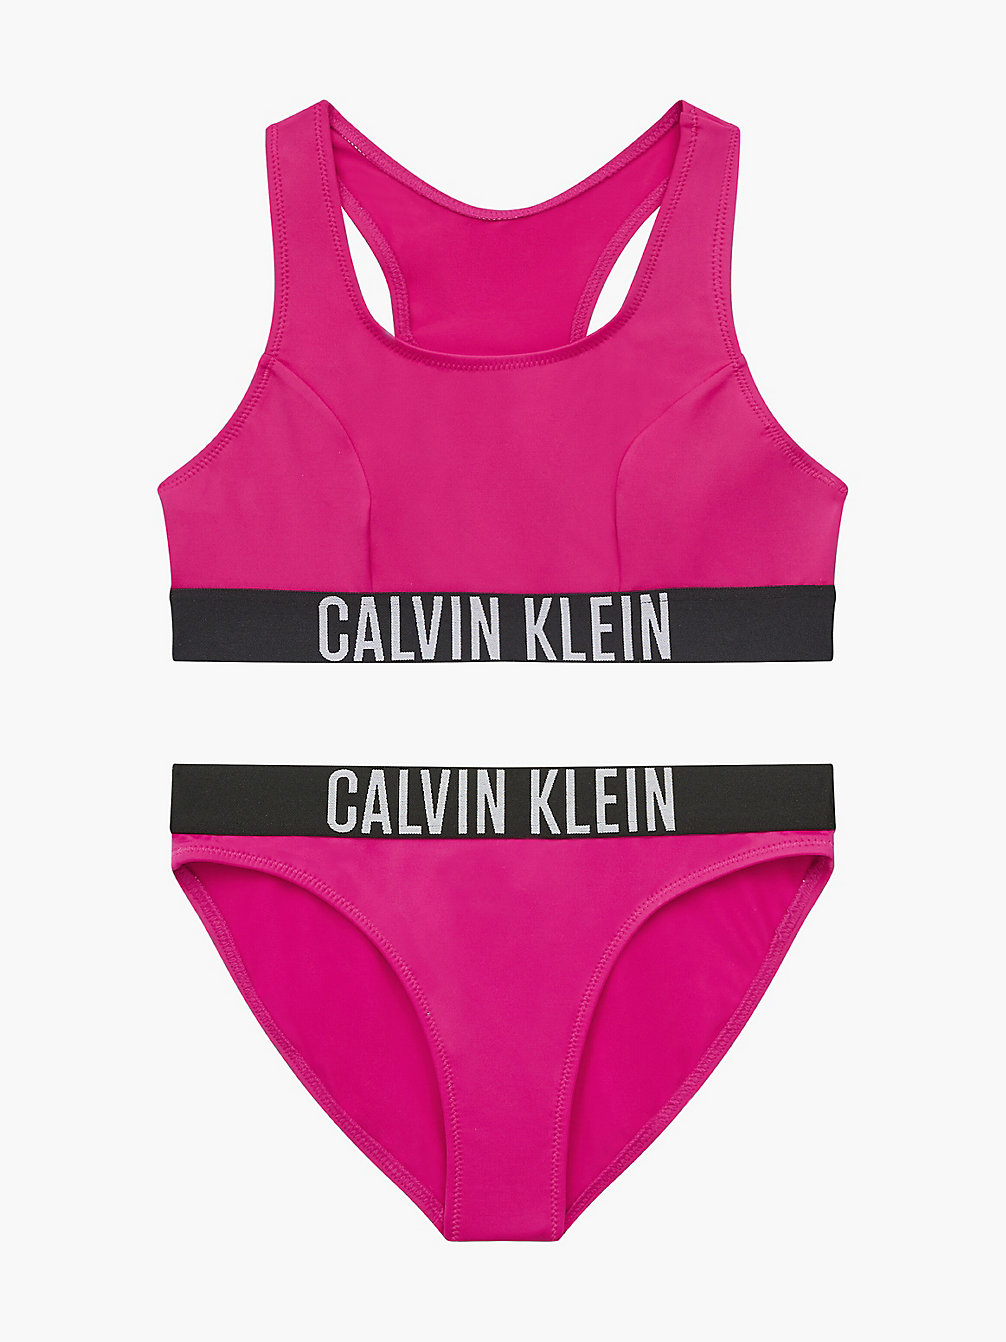 Set Bikini Bambina Con Brassiere - Intense Power > ROYAL PINK > undefined girls > Calvin Klein